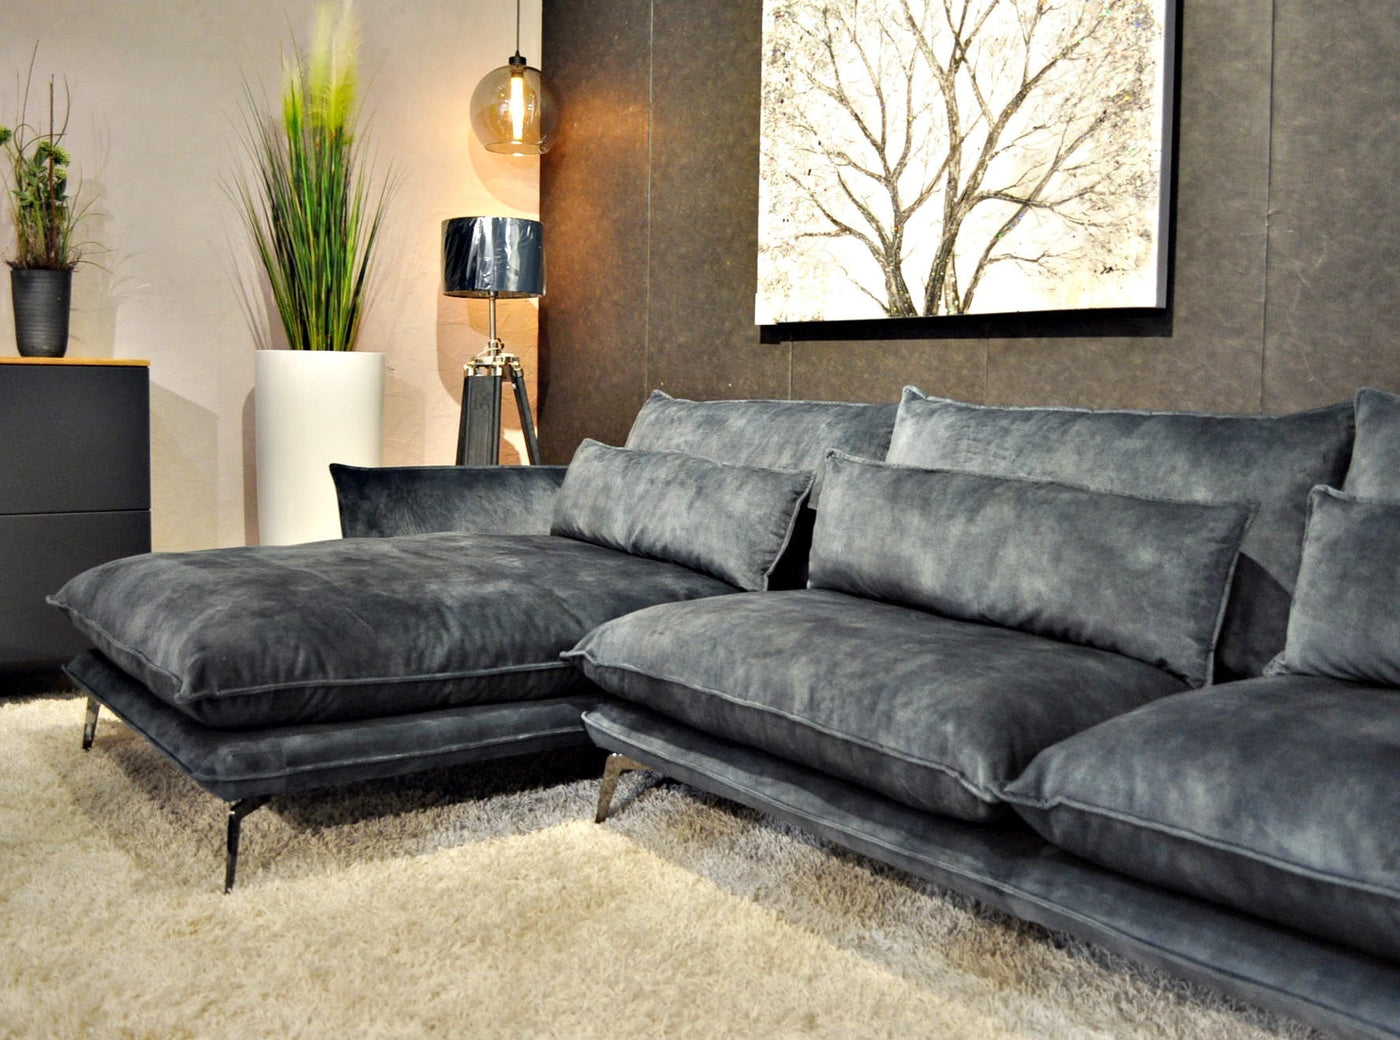 Sofa / Couch Sky Petrol mit Metallfüße passend zu Sessel Sky Schöne Deko